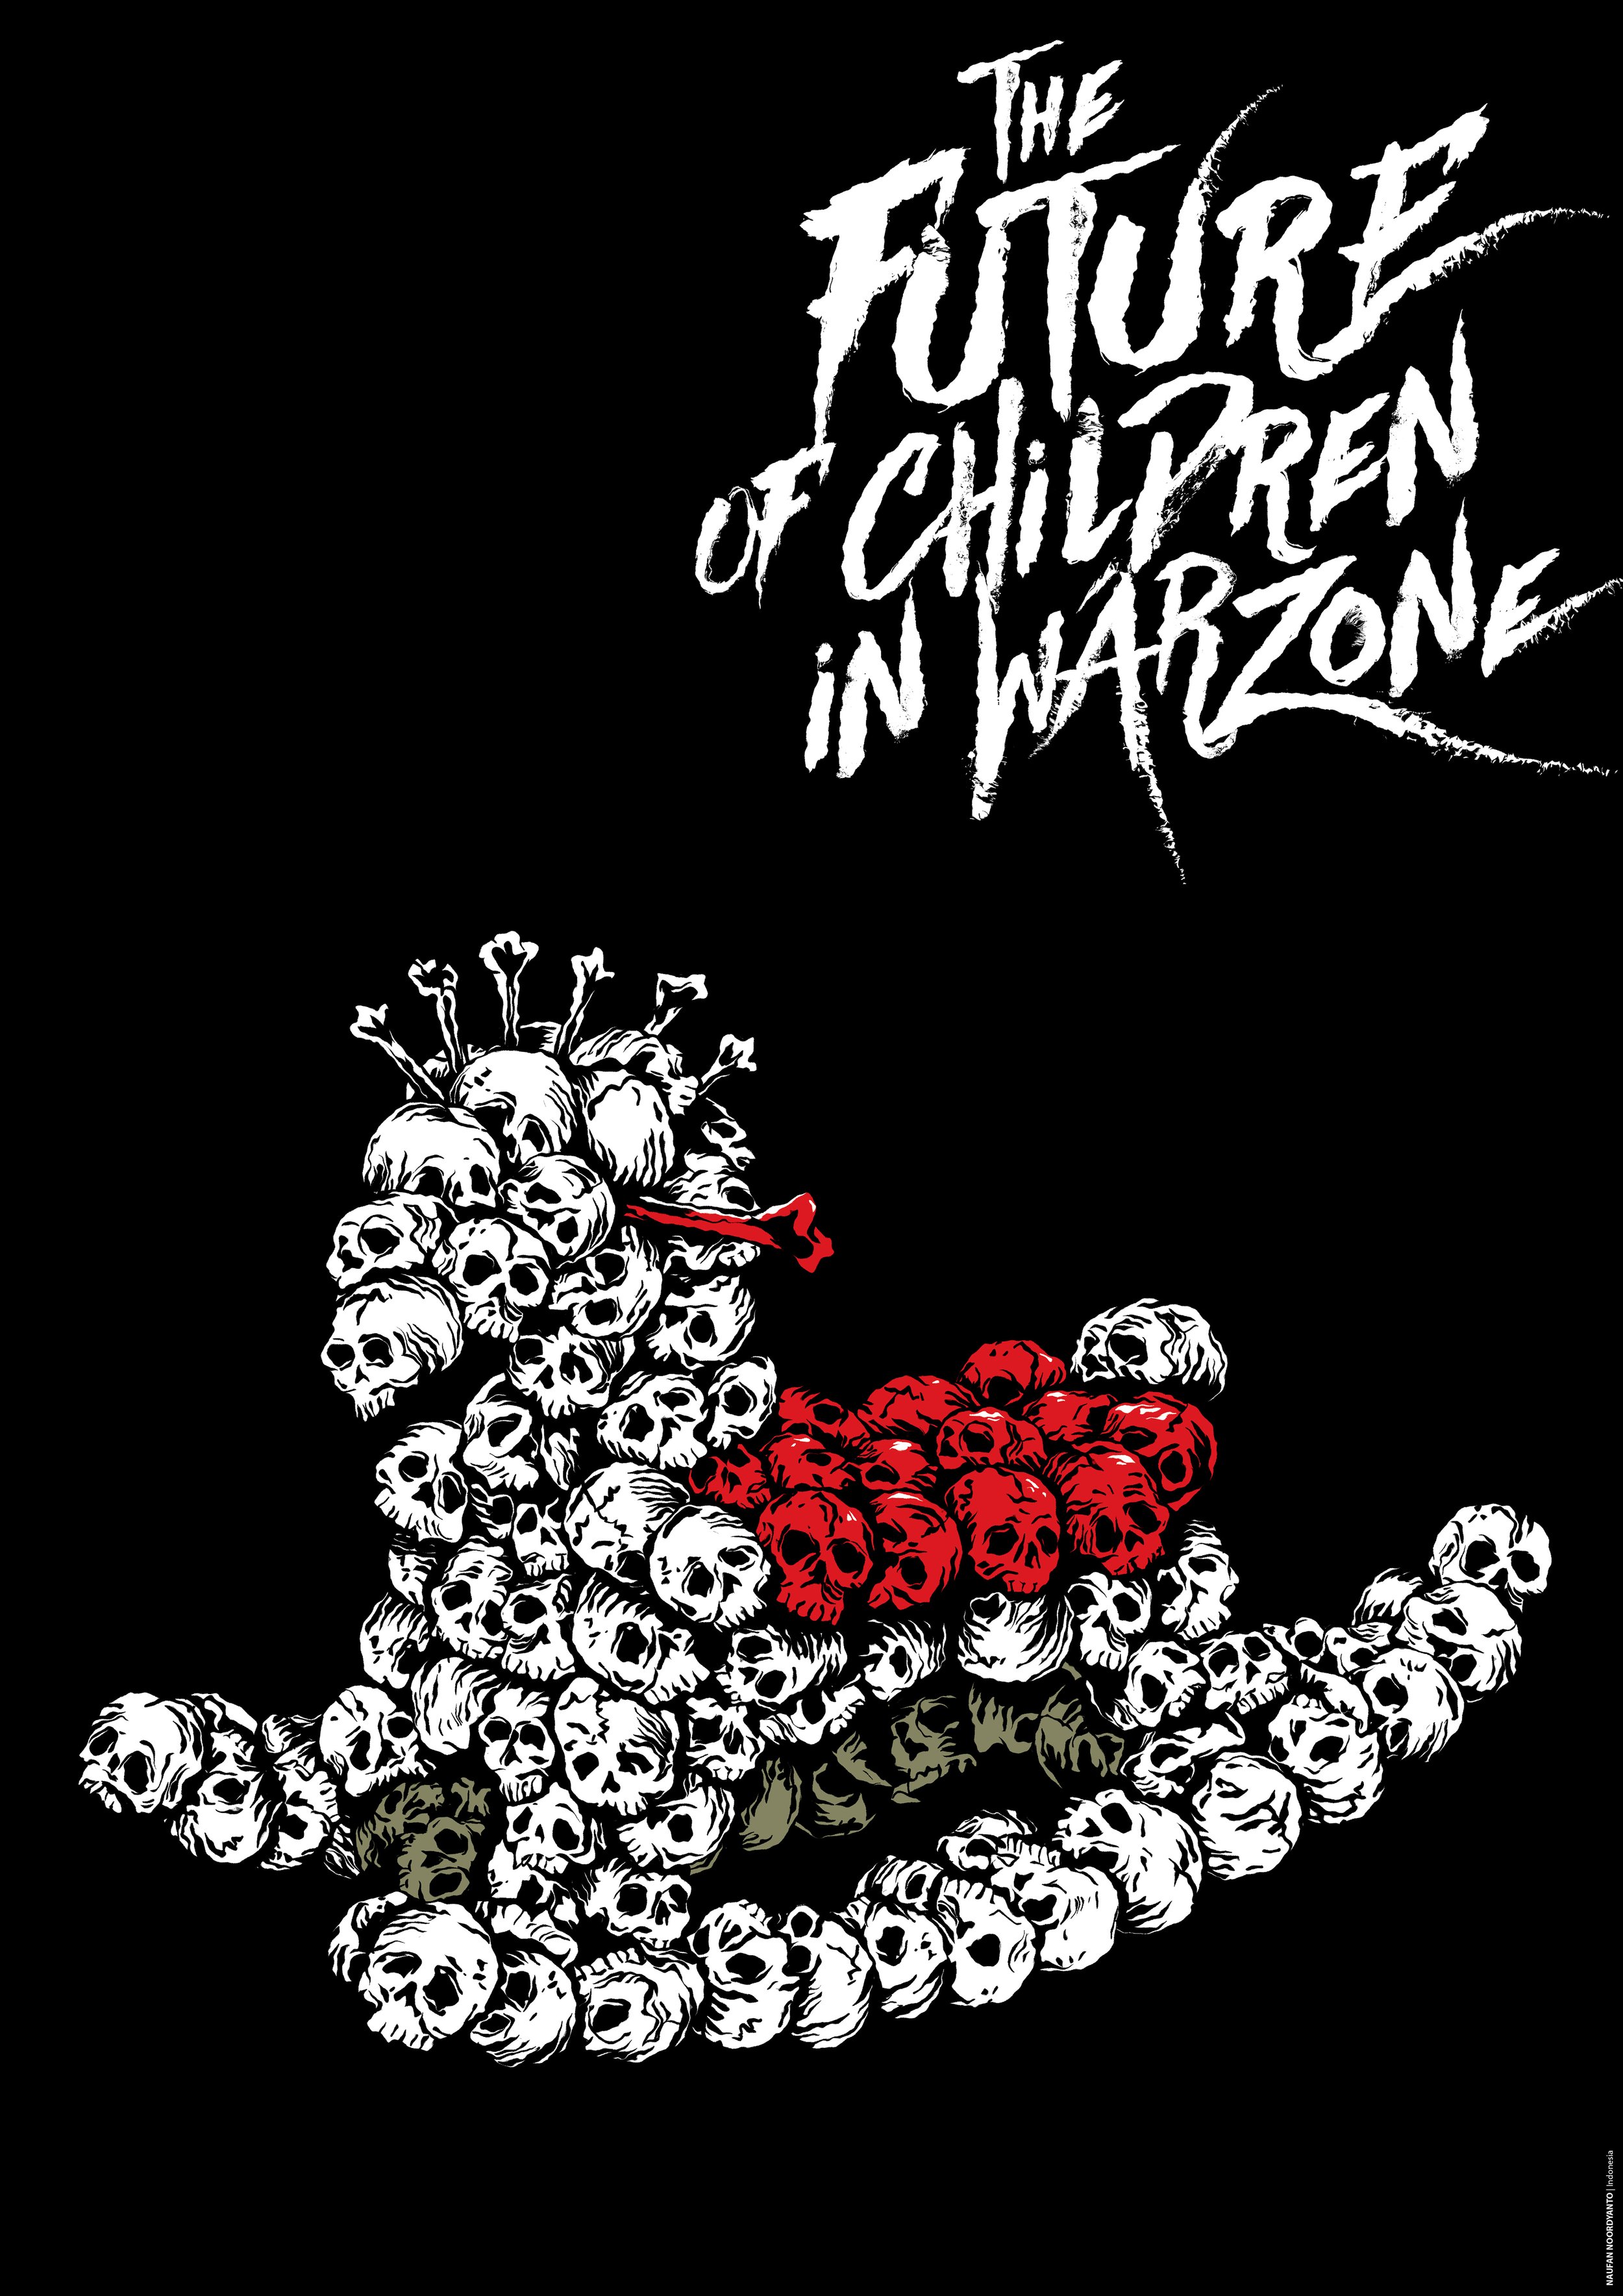 NAUFAN NOORDYANTO - Indonesia - Children in warzone.jpg